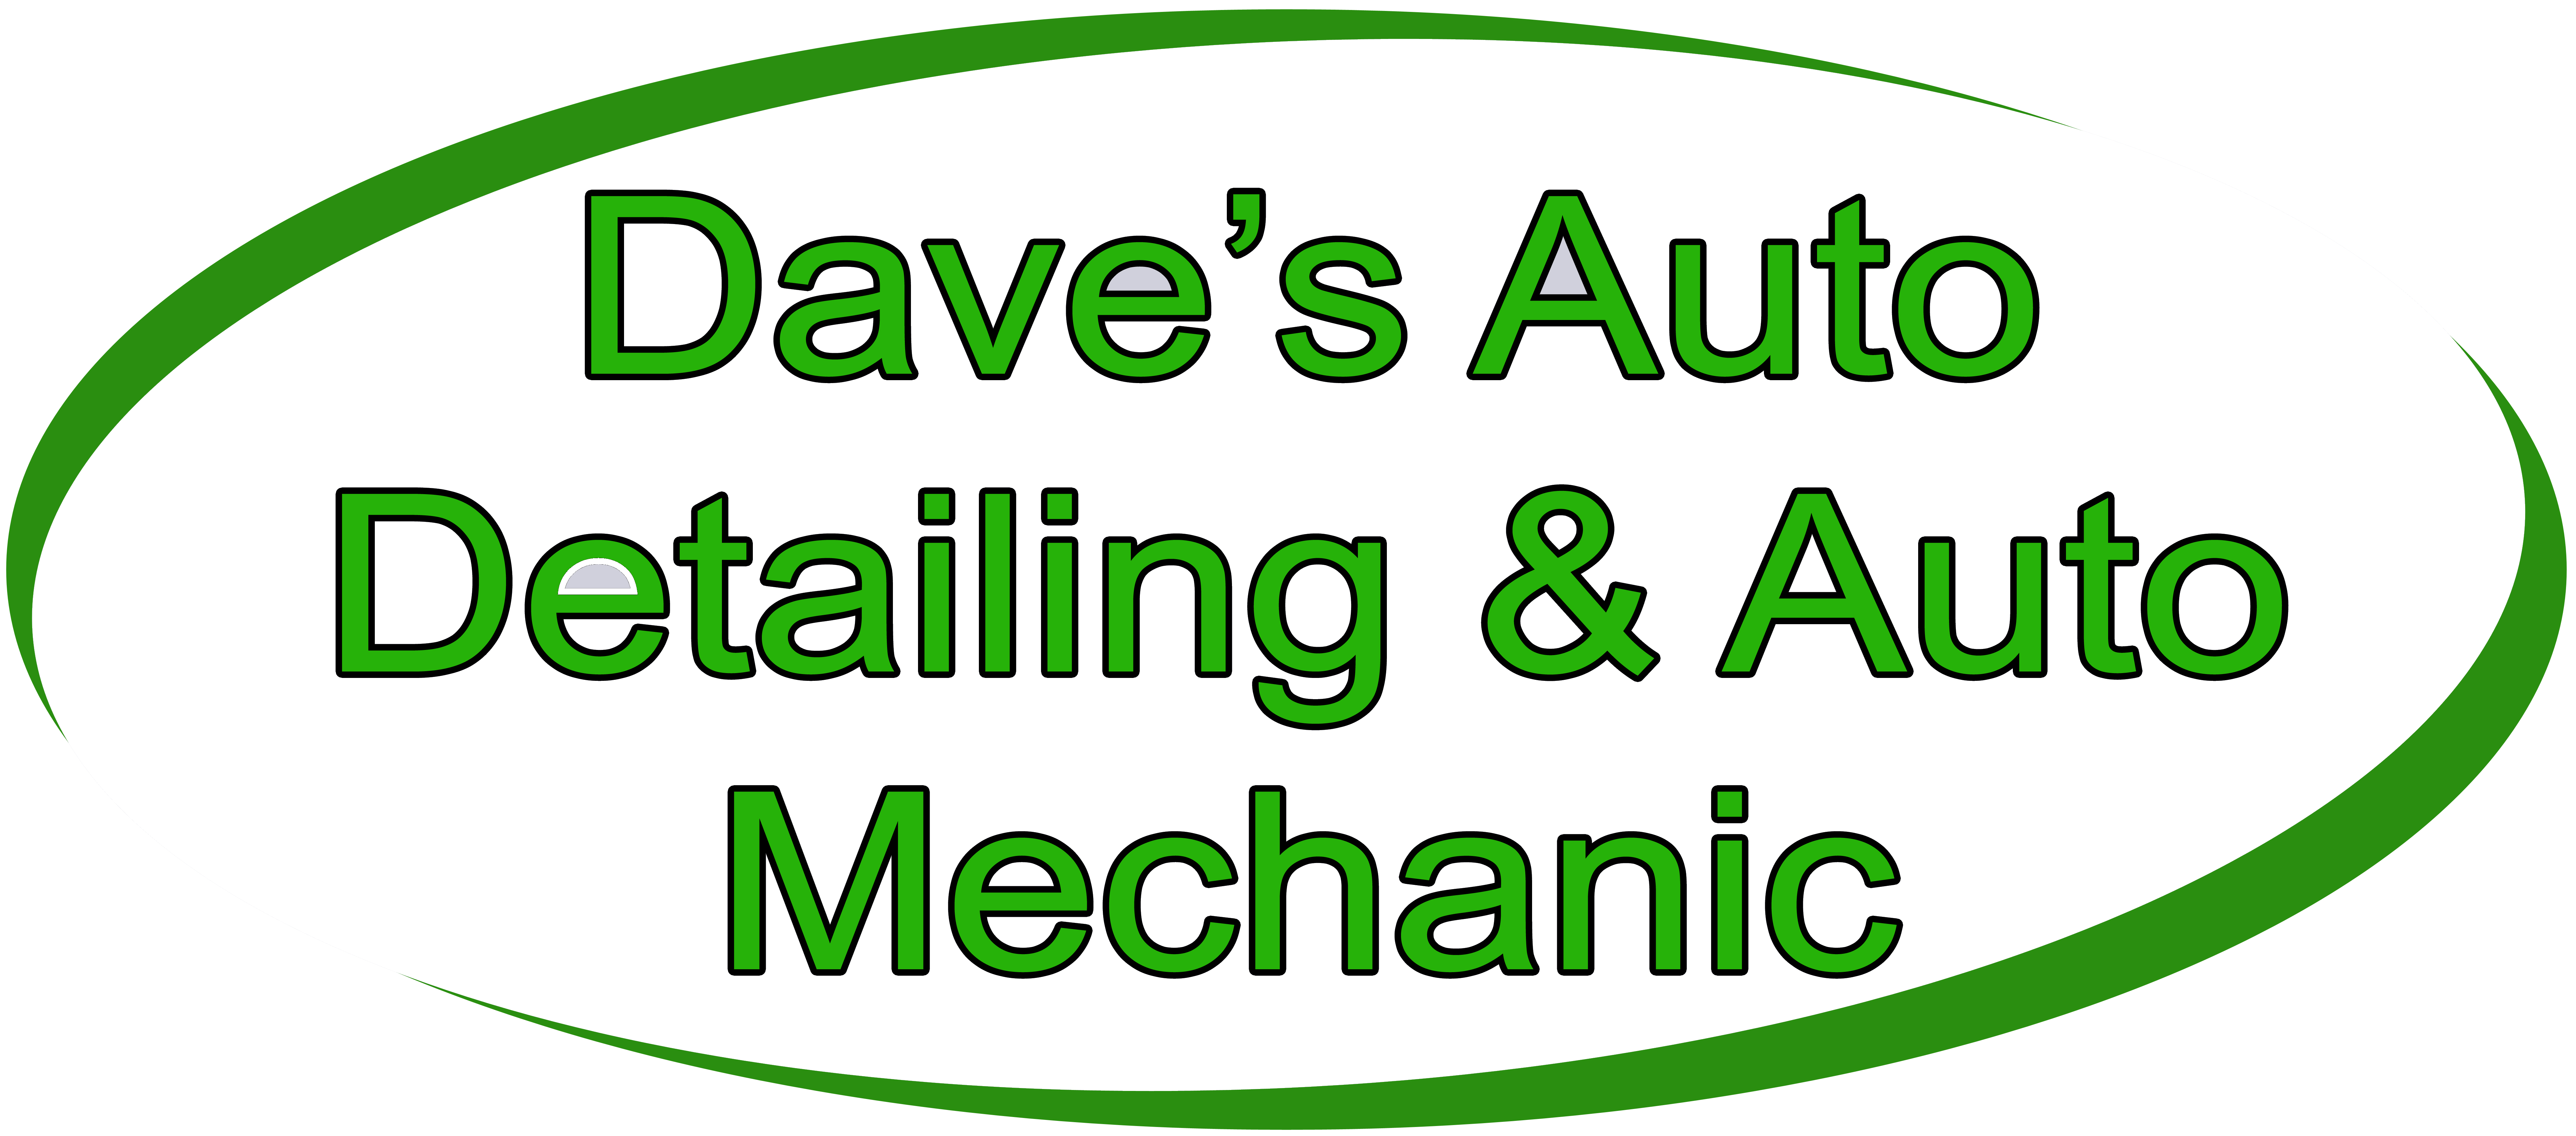 Dave's Auto Detailing and Mechanics